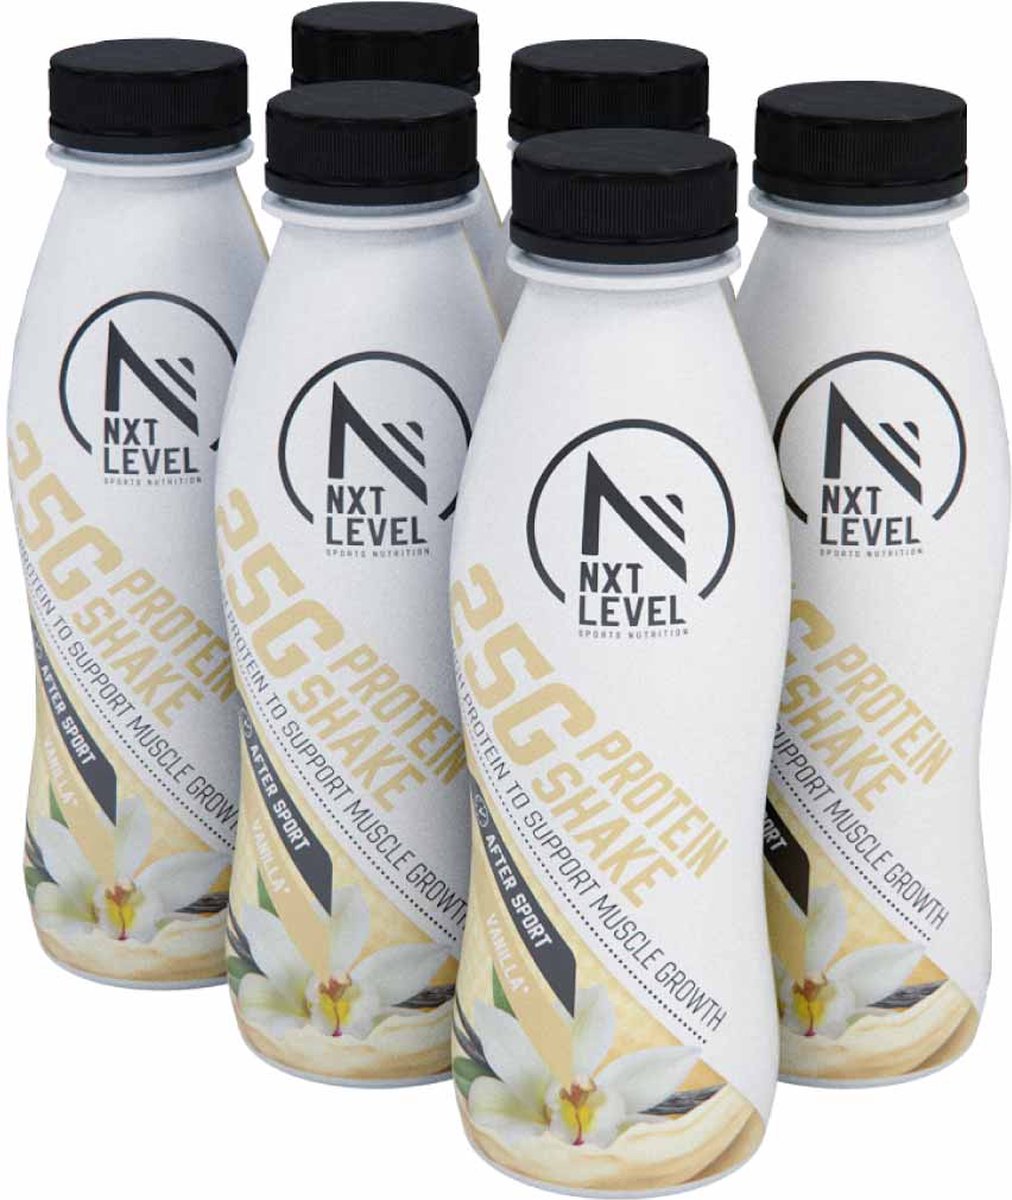 NXT Level Eiwitrijke Shake - 25g eiwitten per flesje - 6 x 330 ml - Vanille